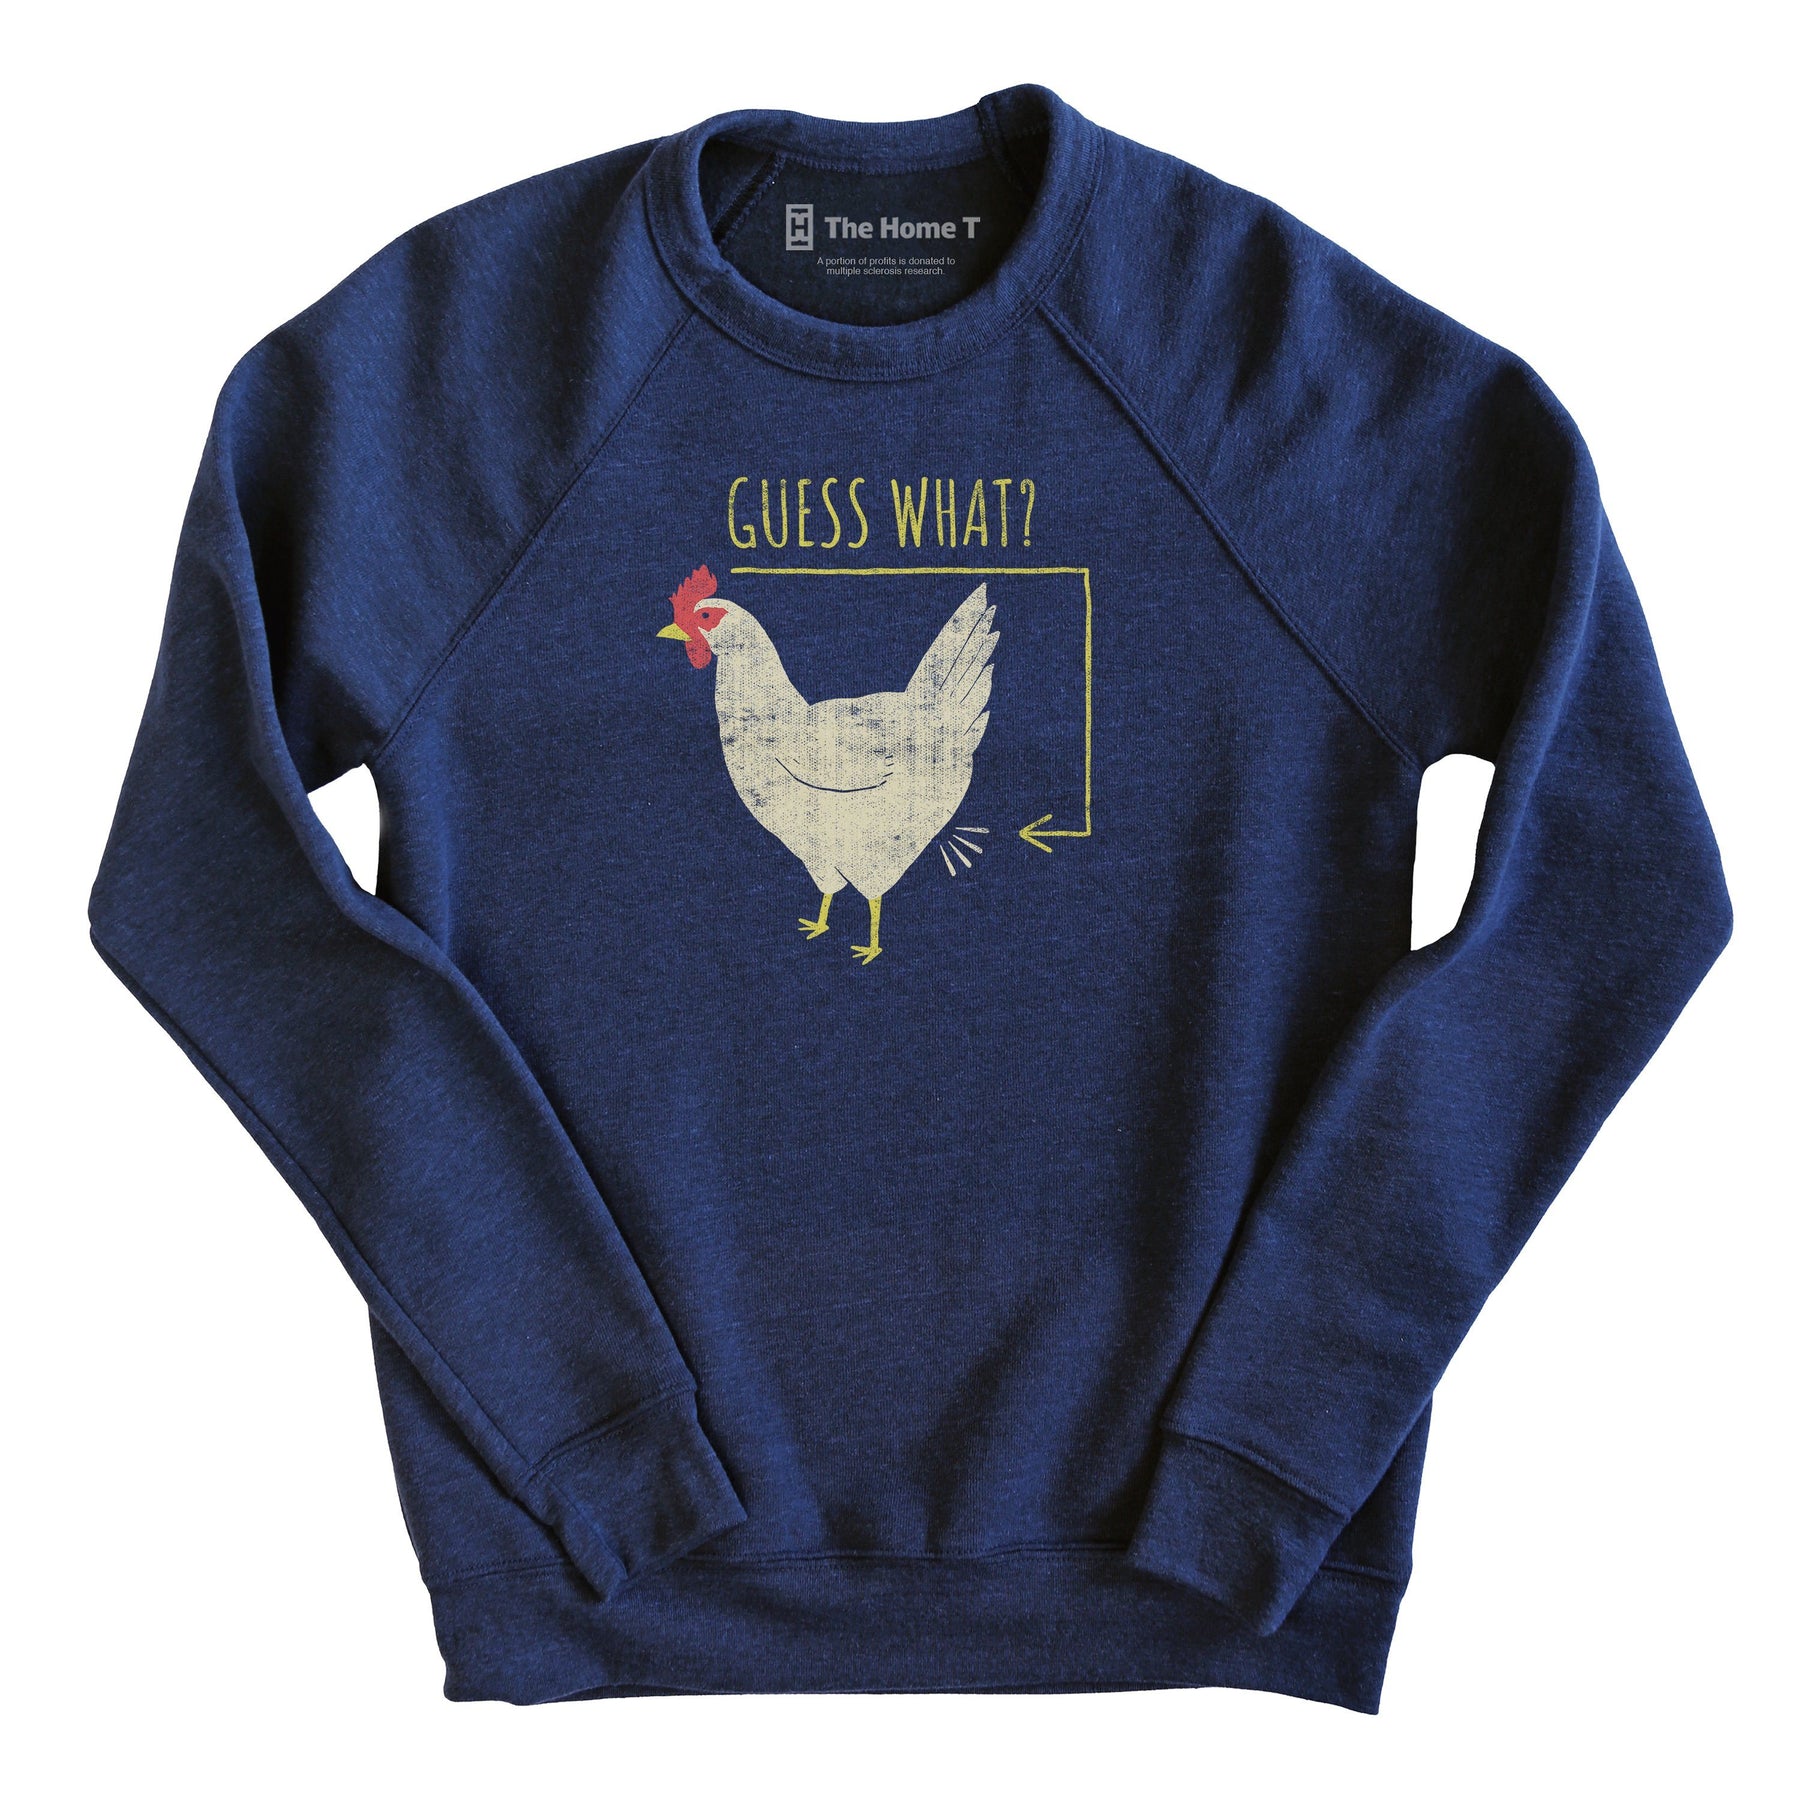 Chicken Butt Crew neck The Home T XS Sweatshirt